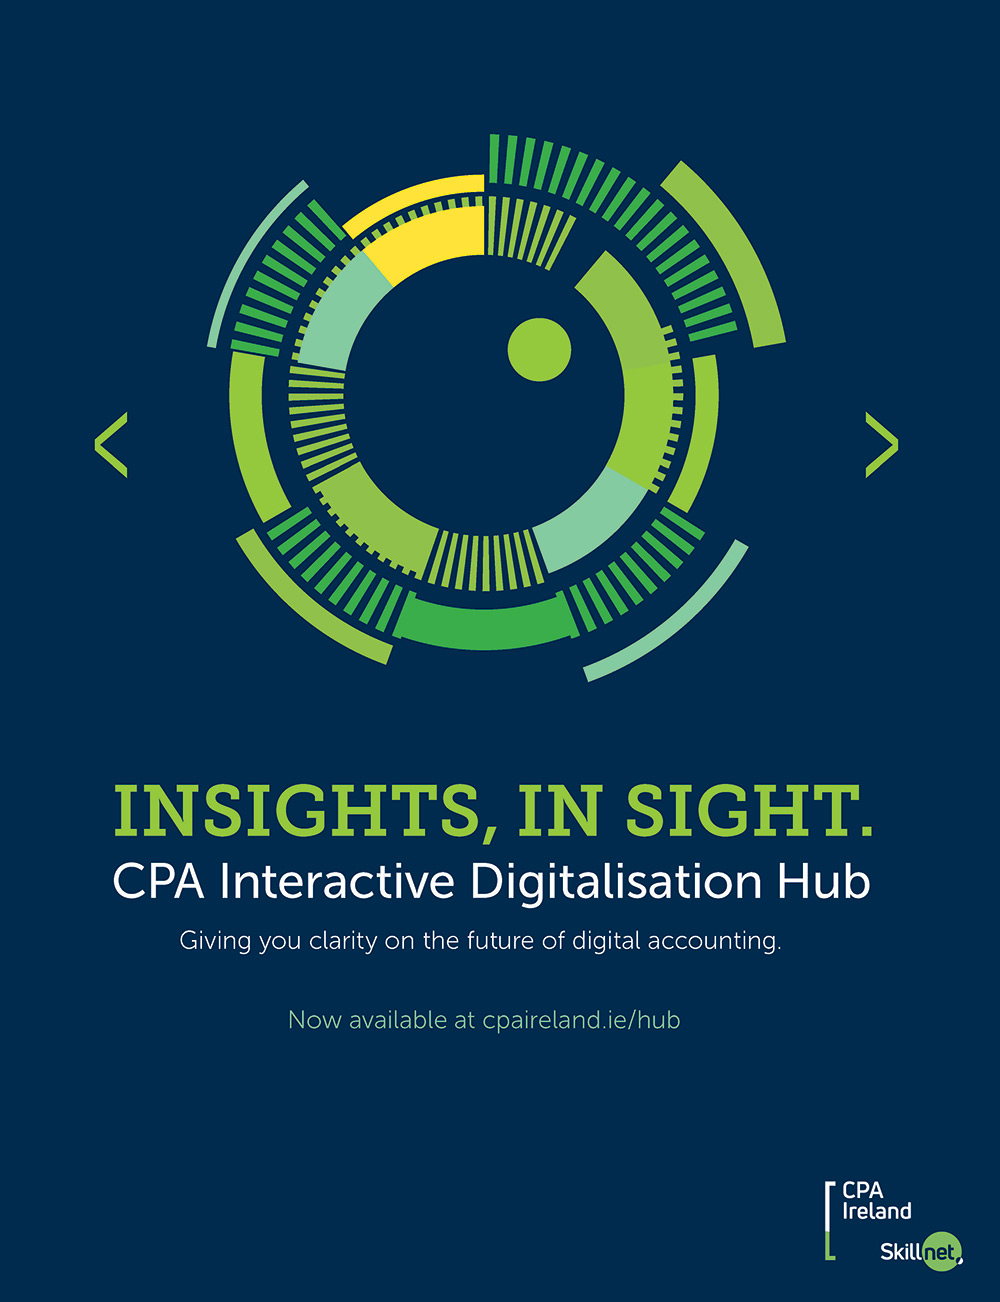 CPA Ireland Interactive Digitalisation Hub Advertisement